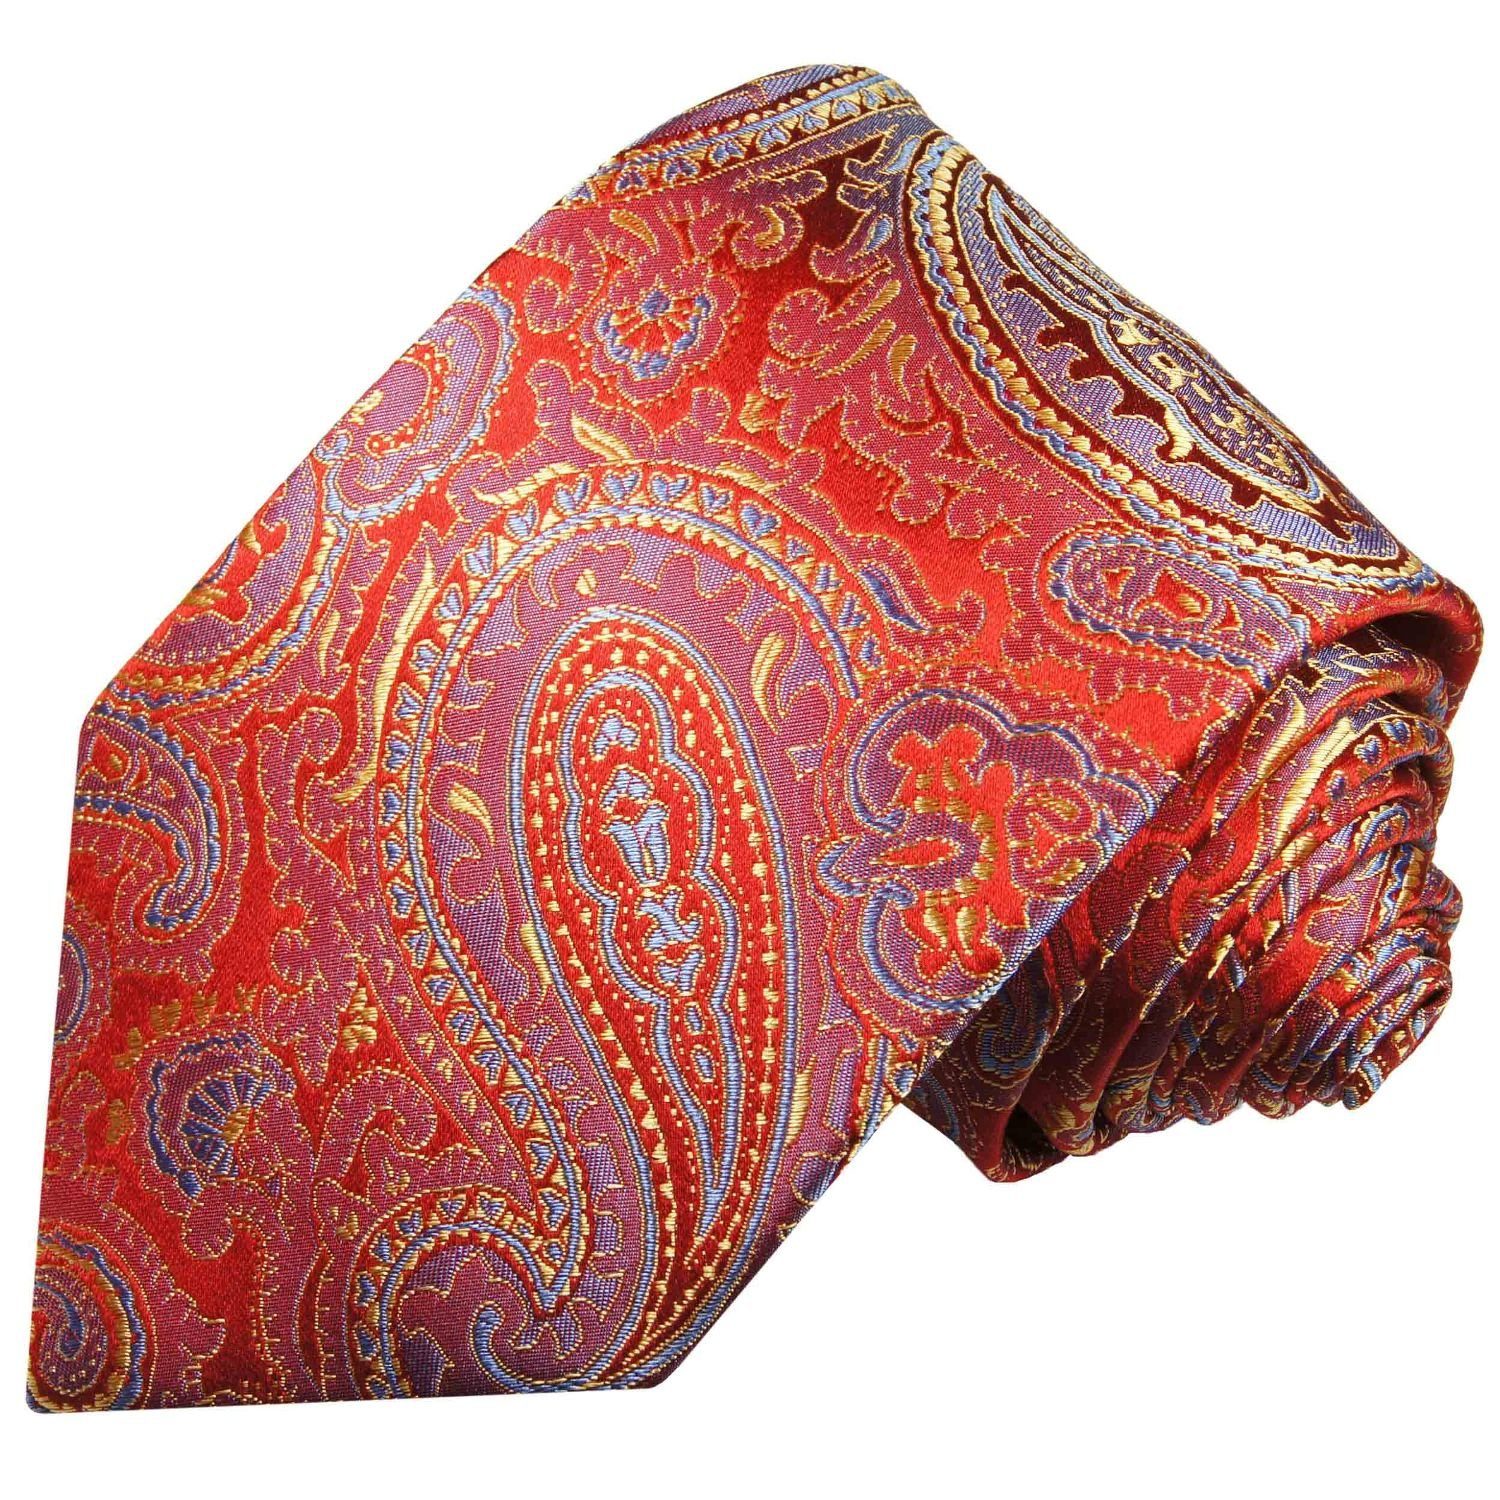 Paul Malone Krawatte Elegante Seidenkrawatte Herren Schlips paisley brokat 100% Seide Schmal (6cm), rot blau gold 696 | Breite Krawatten